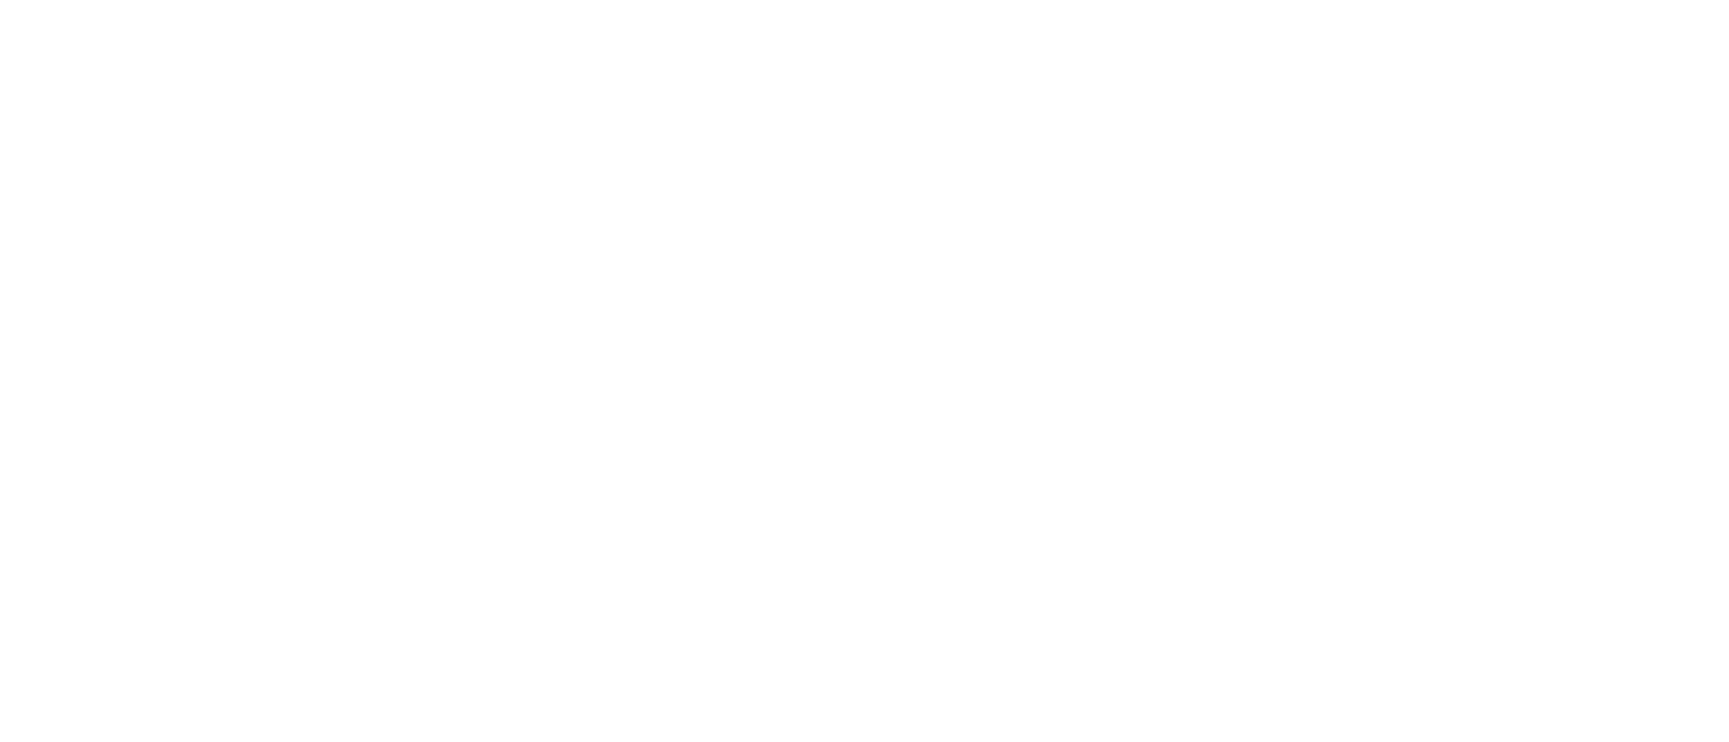 Cheyenne Mountain Resort Logo